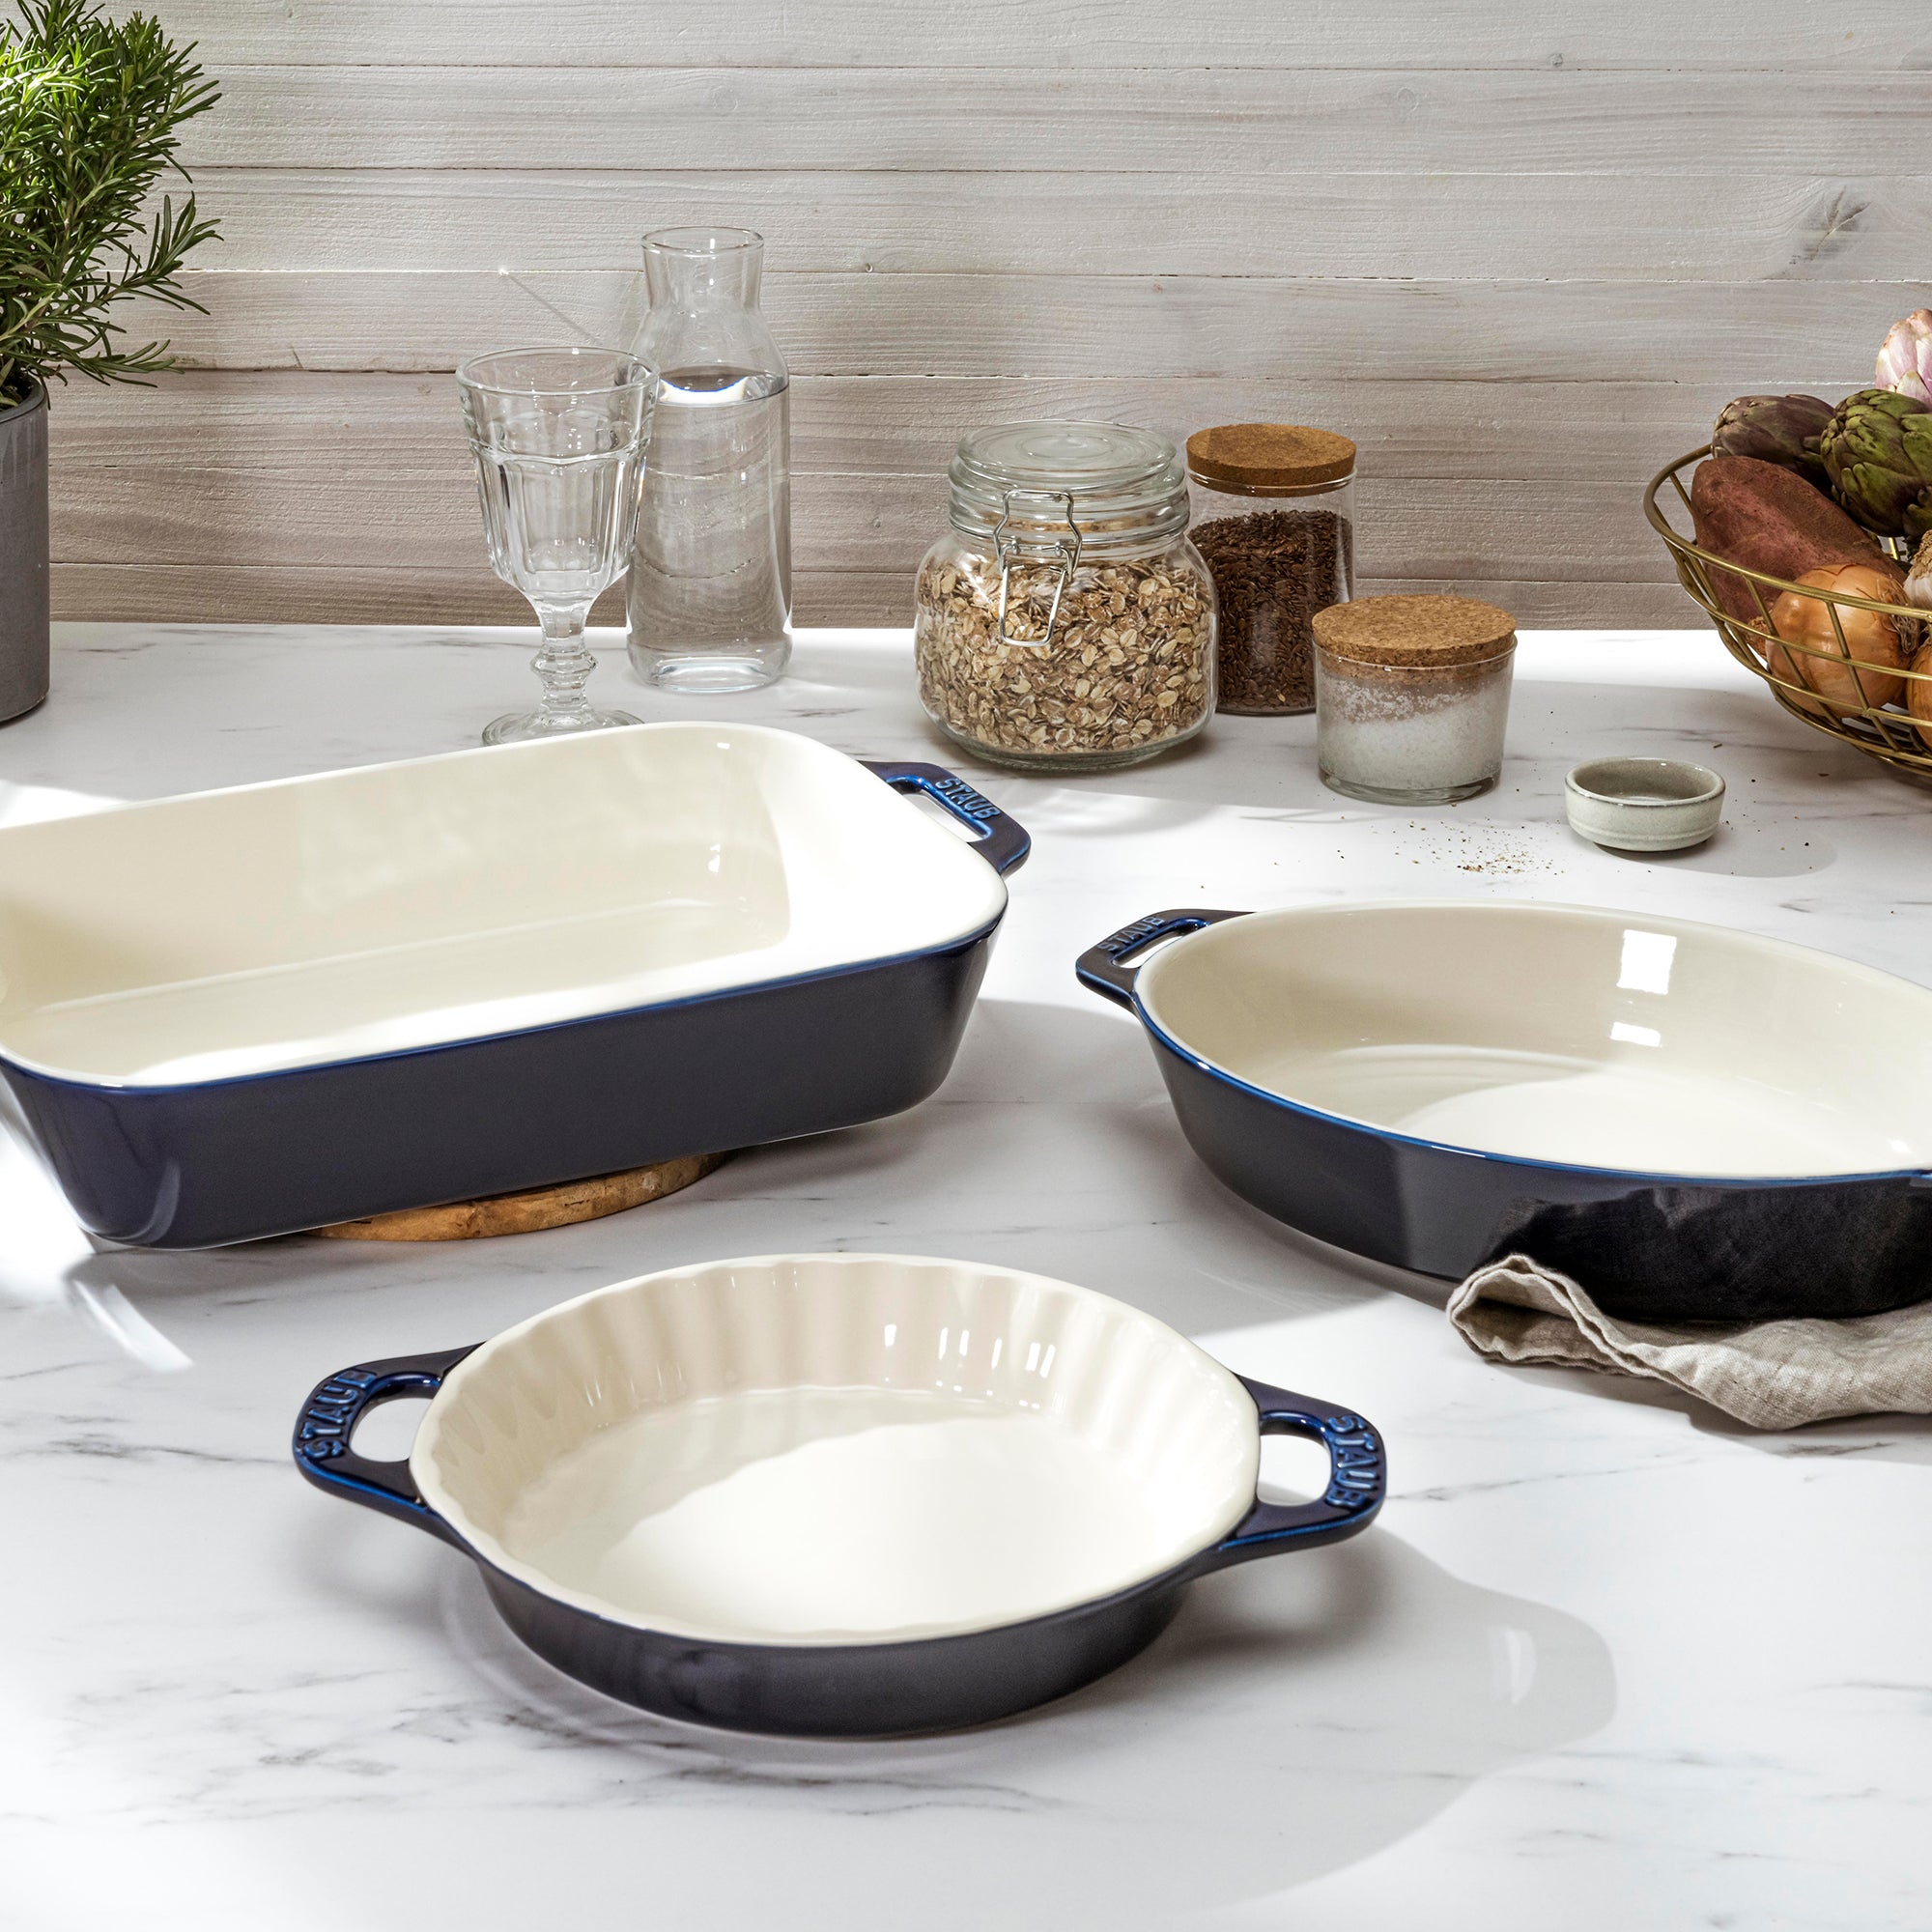 Staub Ceramic 13-inch x 9-inch Rectangular Baking Dish - Rustic Turquoise,  13 x 9 - Foods Co.